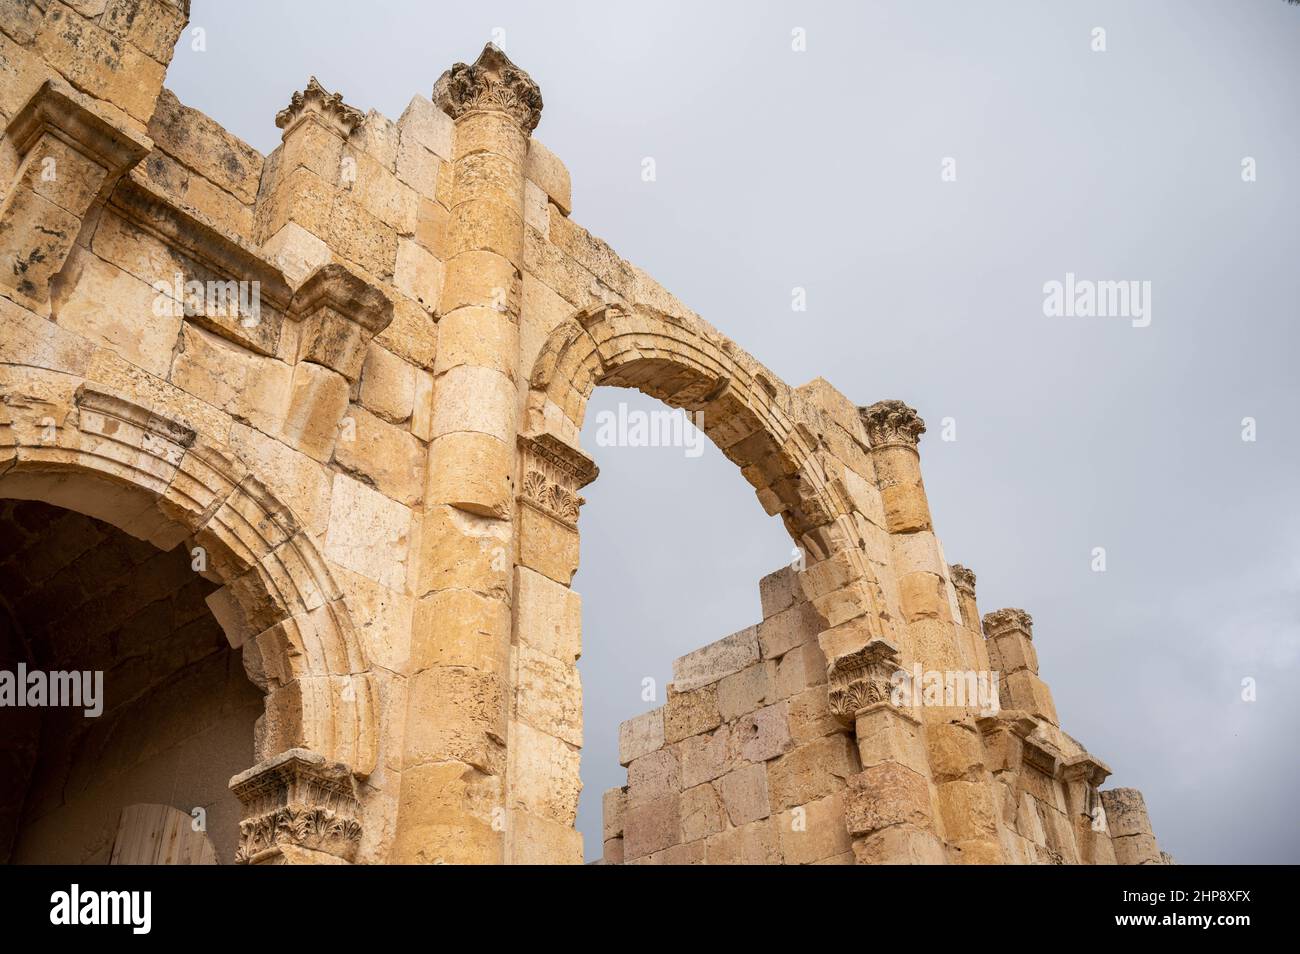 Arch of Hadrian, Jerash Roman ruins, Jordan Stock Photo